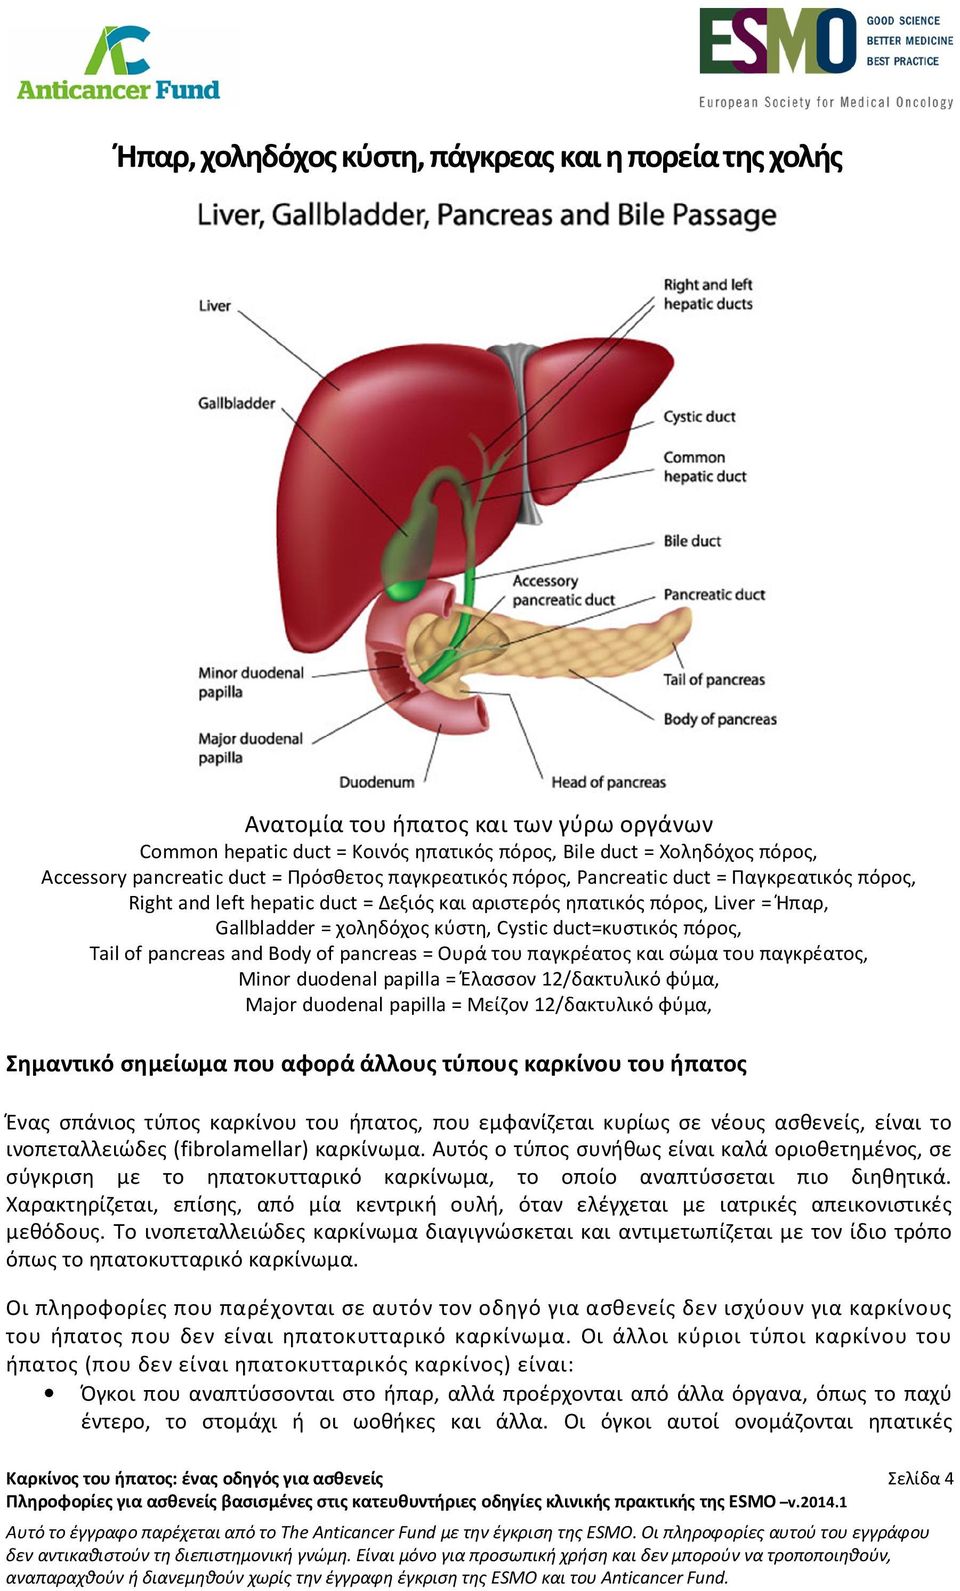 duct=κυστικός πόρος, Tail of pancreas and Body of pancreas = Ουρά του παγκρέατος και σώμα του παγκρέατος, Minor duodenal papilla = Έλασσον 12/δακτυλικό φύμα, Major duodenal papilla = Μείζον